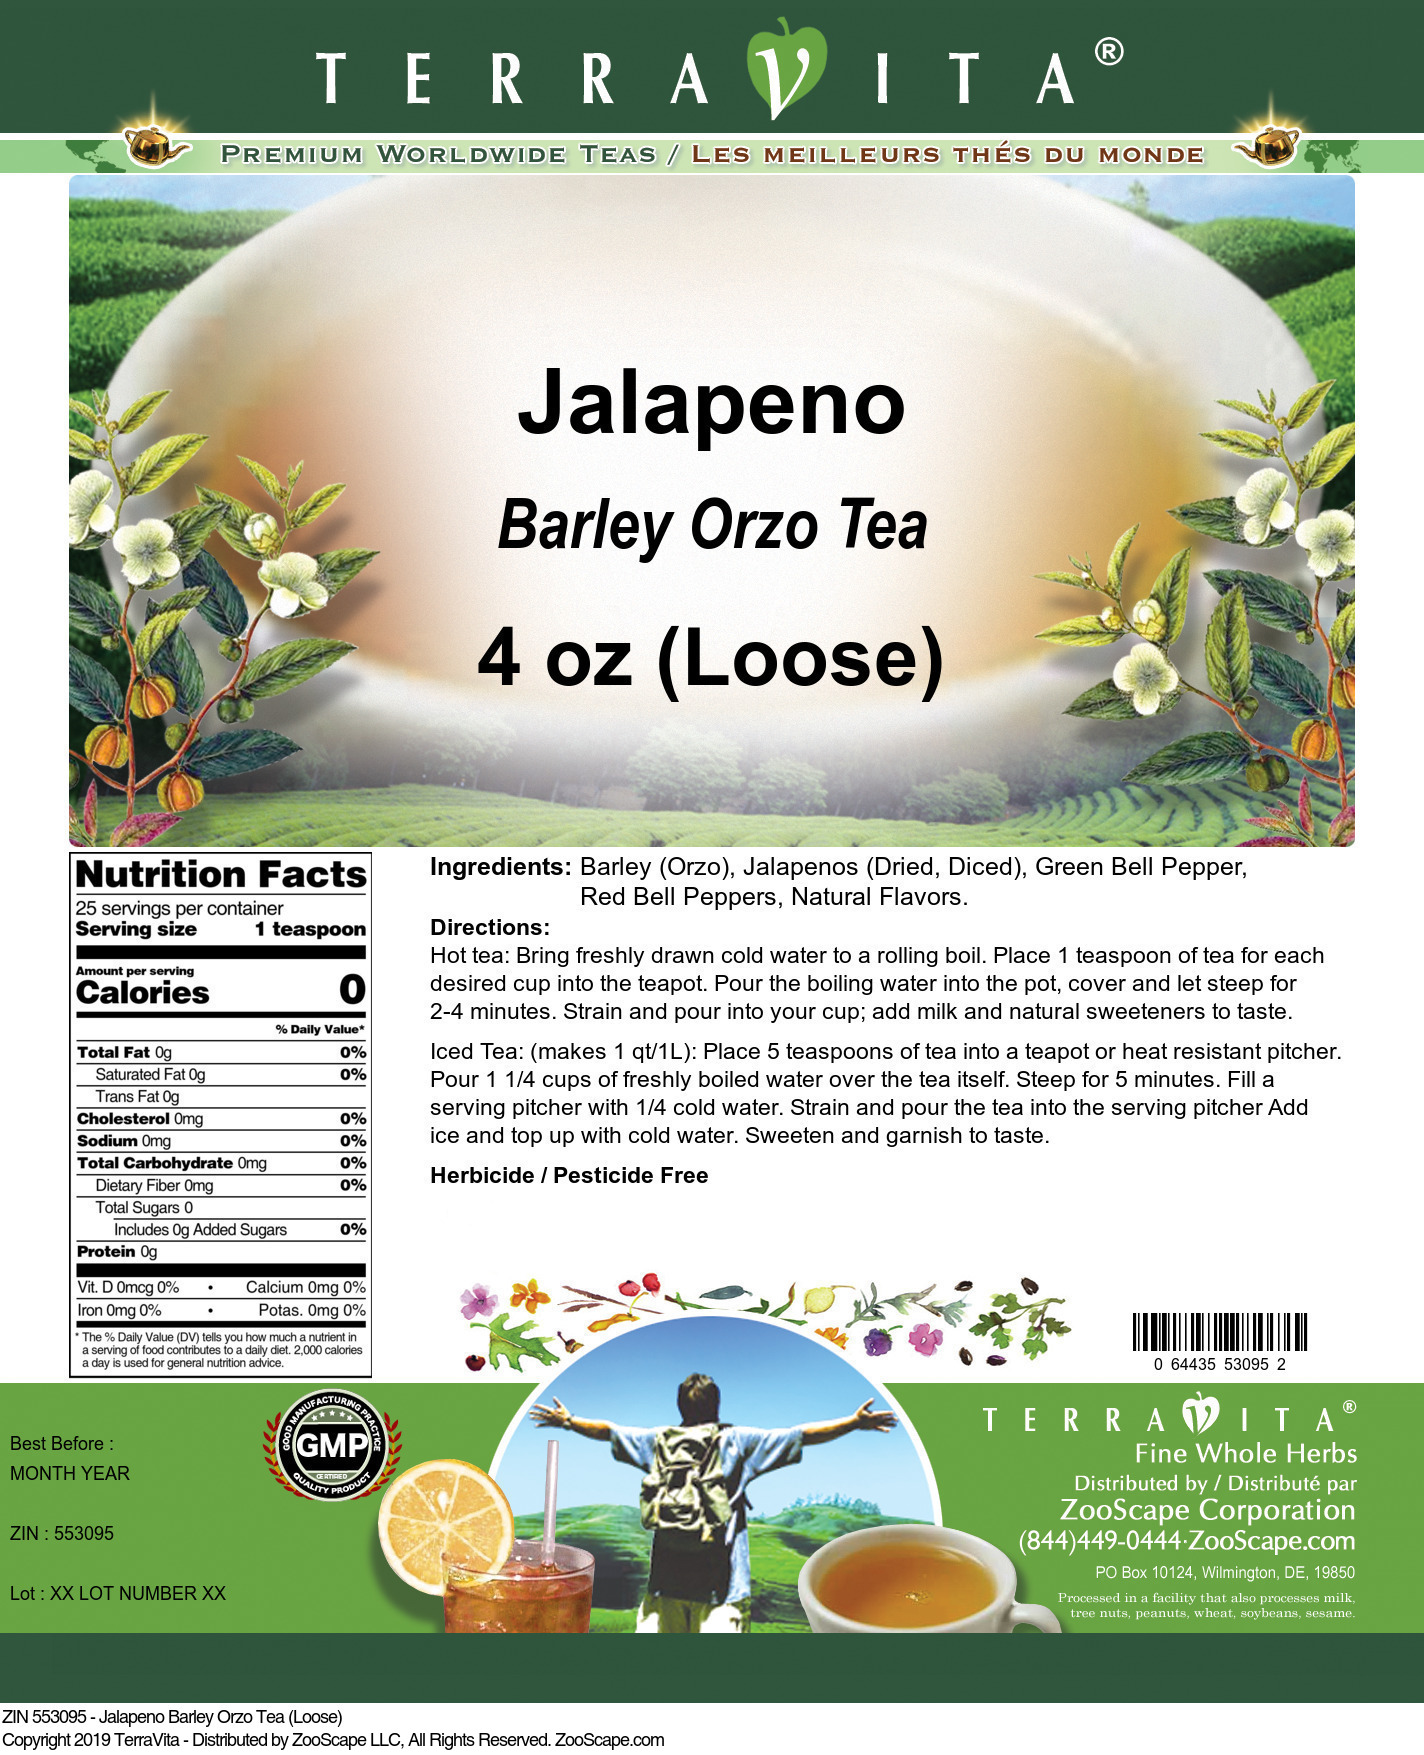 Jalapeno Barley Orzo Tea (Loose) - Label